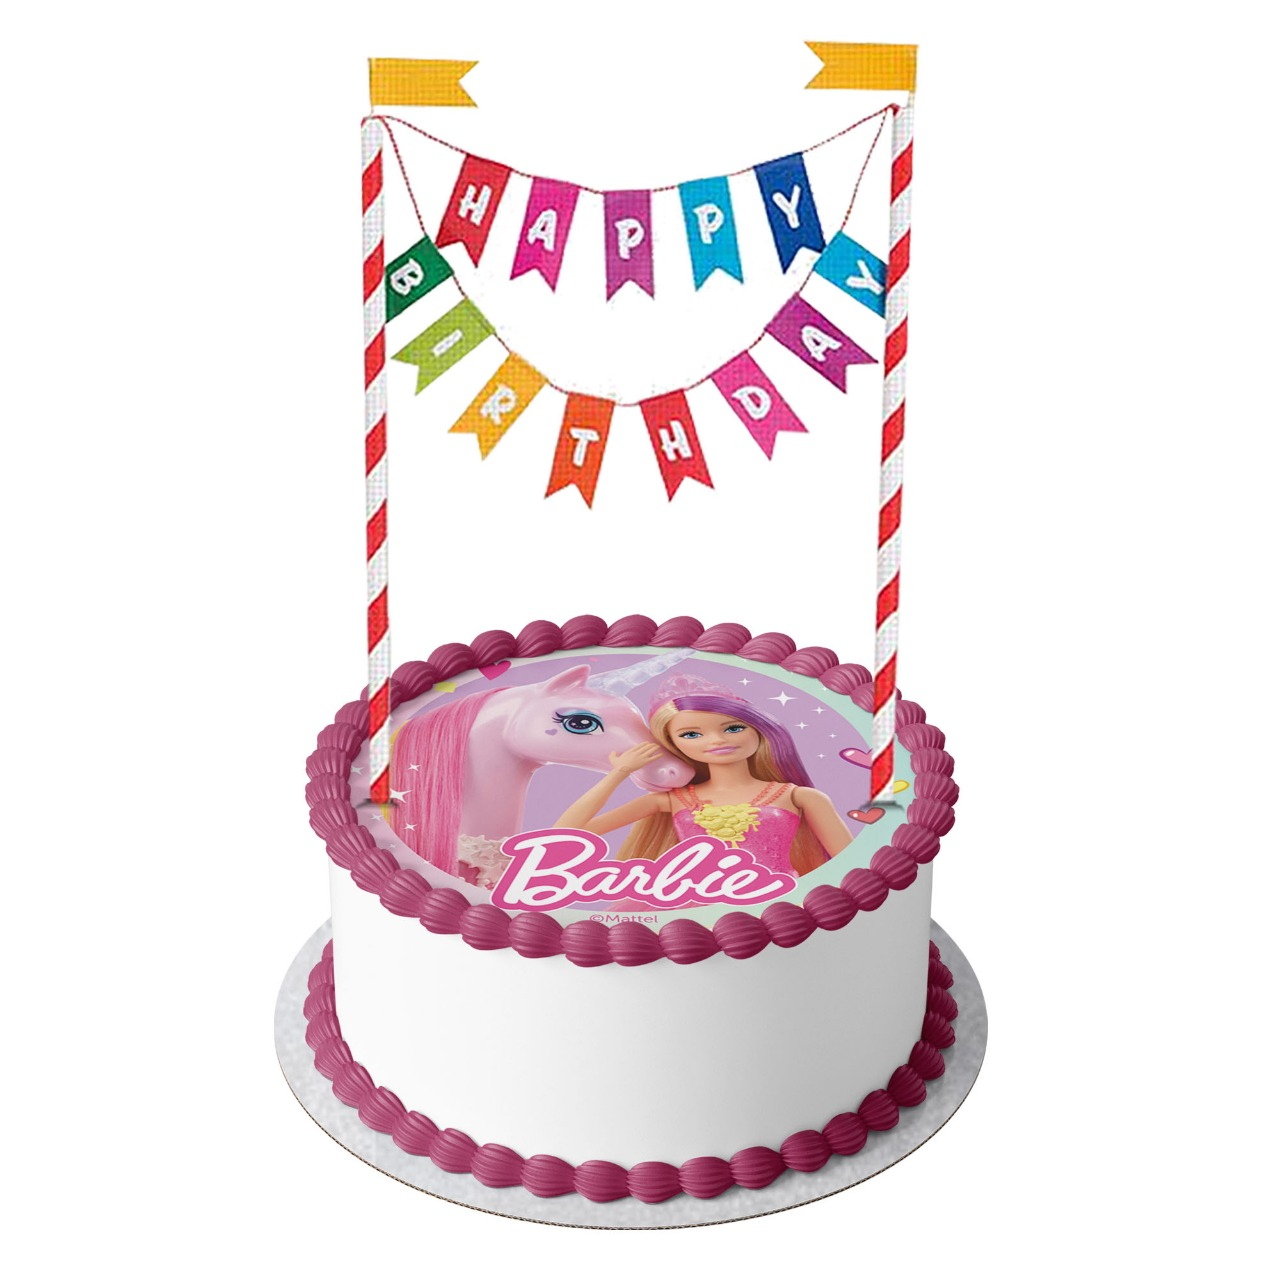 Barbie Cake with Happy Birthday Bunting 